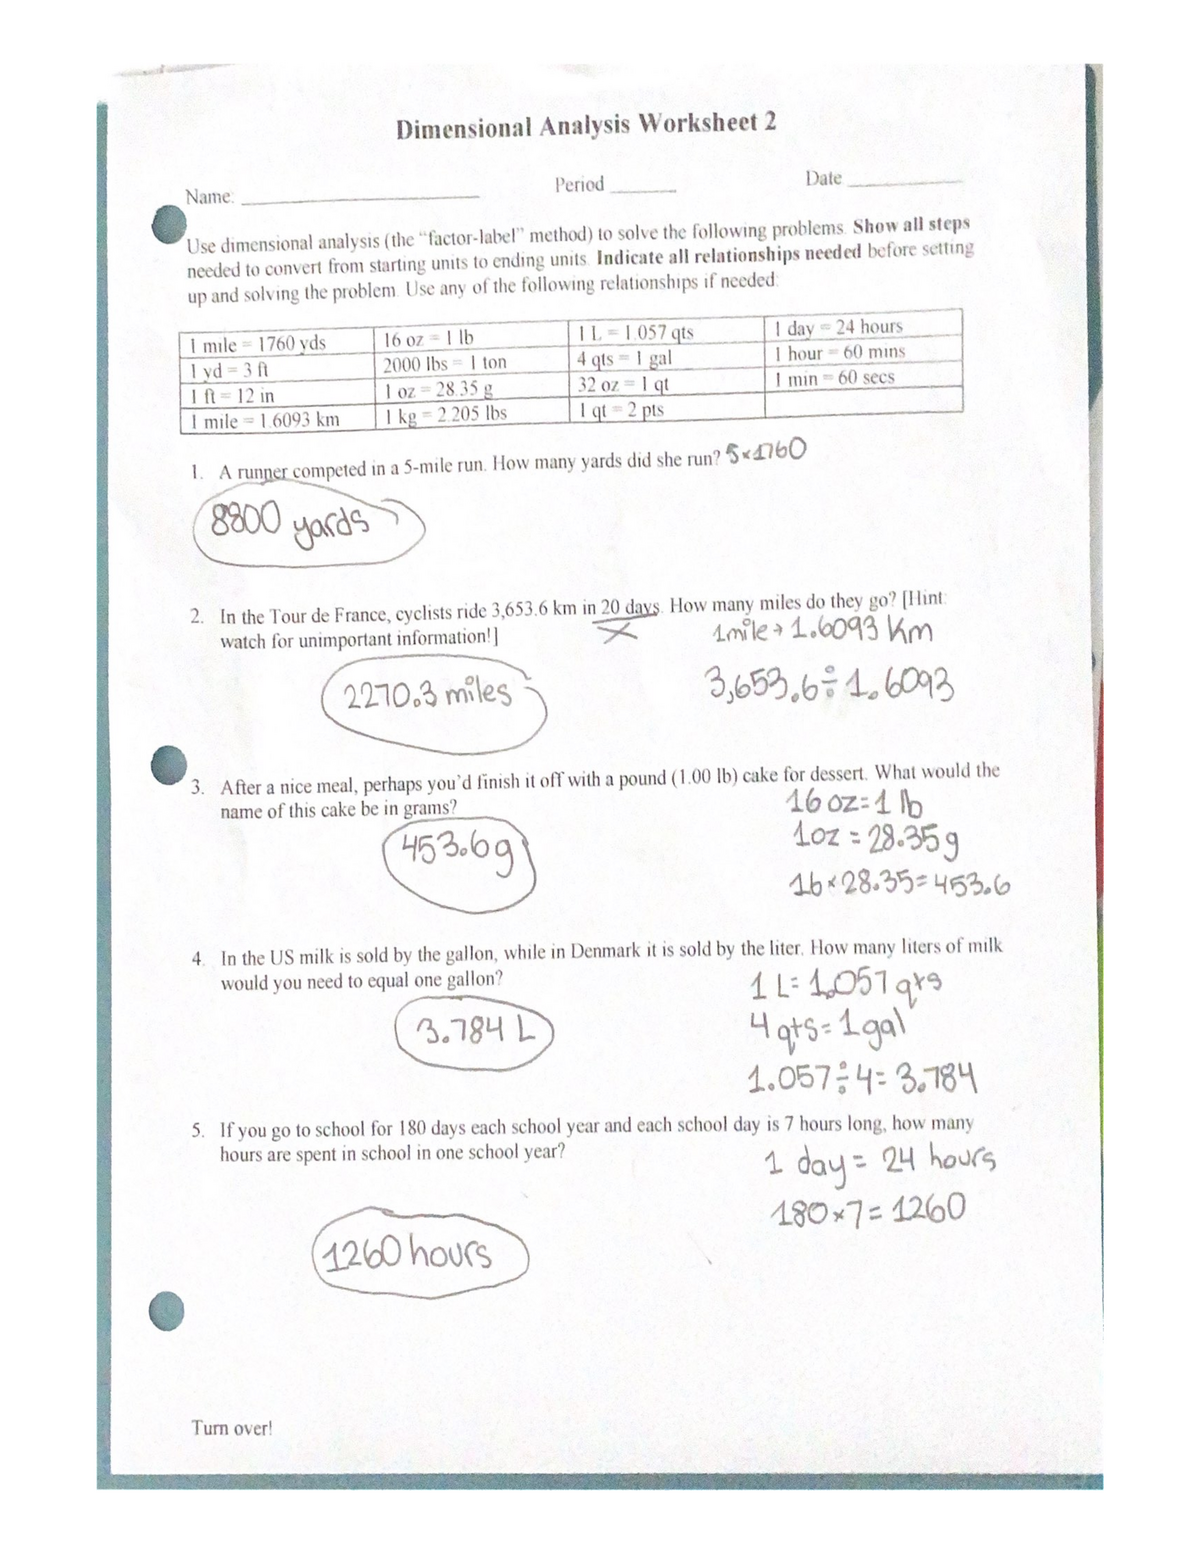 Dimensional Analysis Worksheet 21 practice material - Life 21001 For Dimensional Analysis Worksheet 2